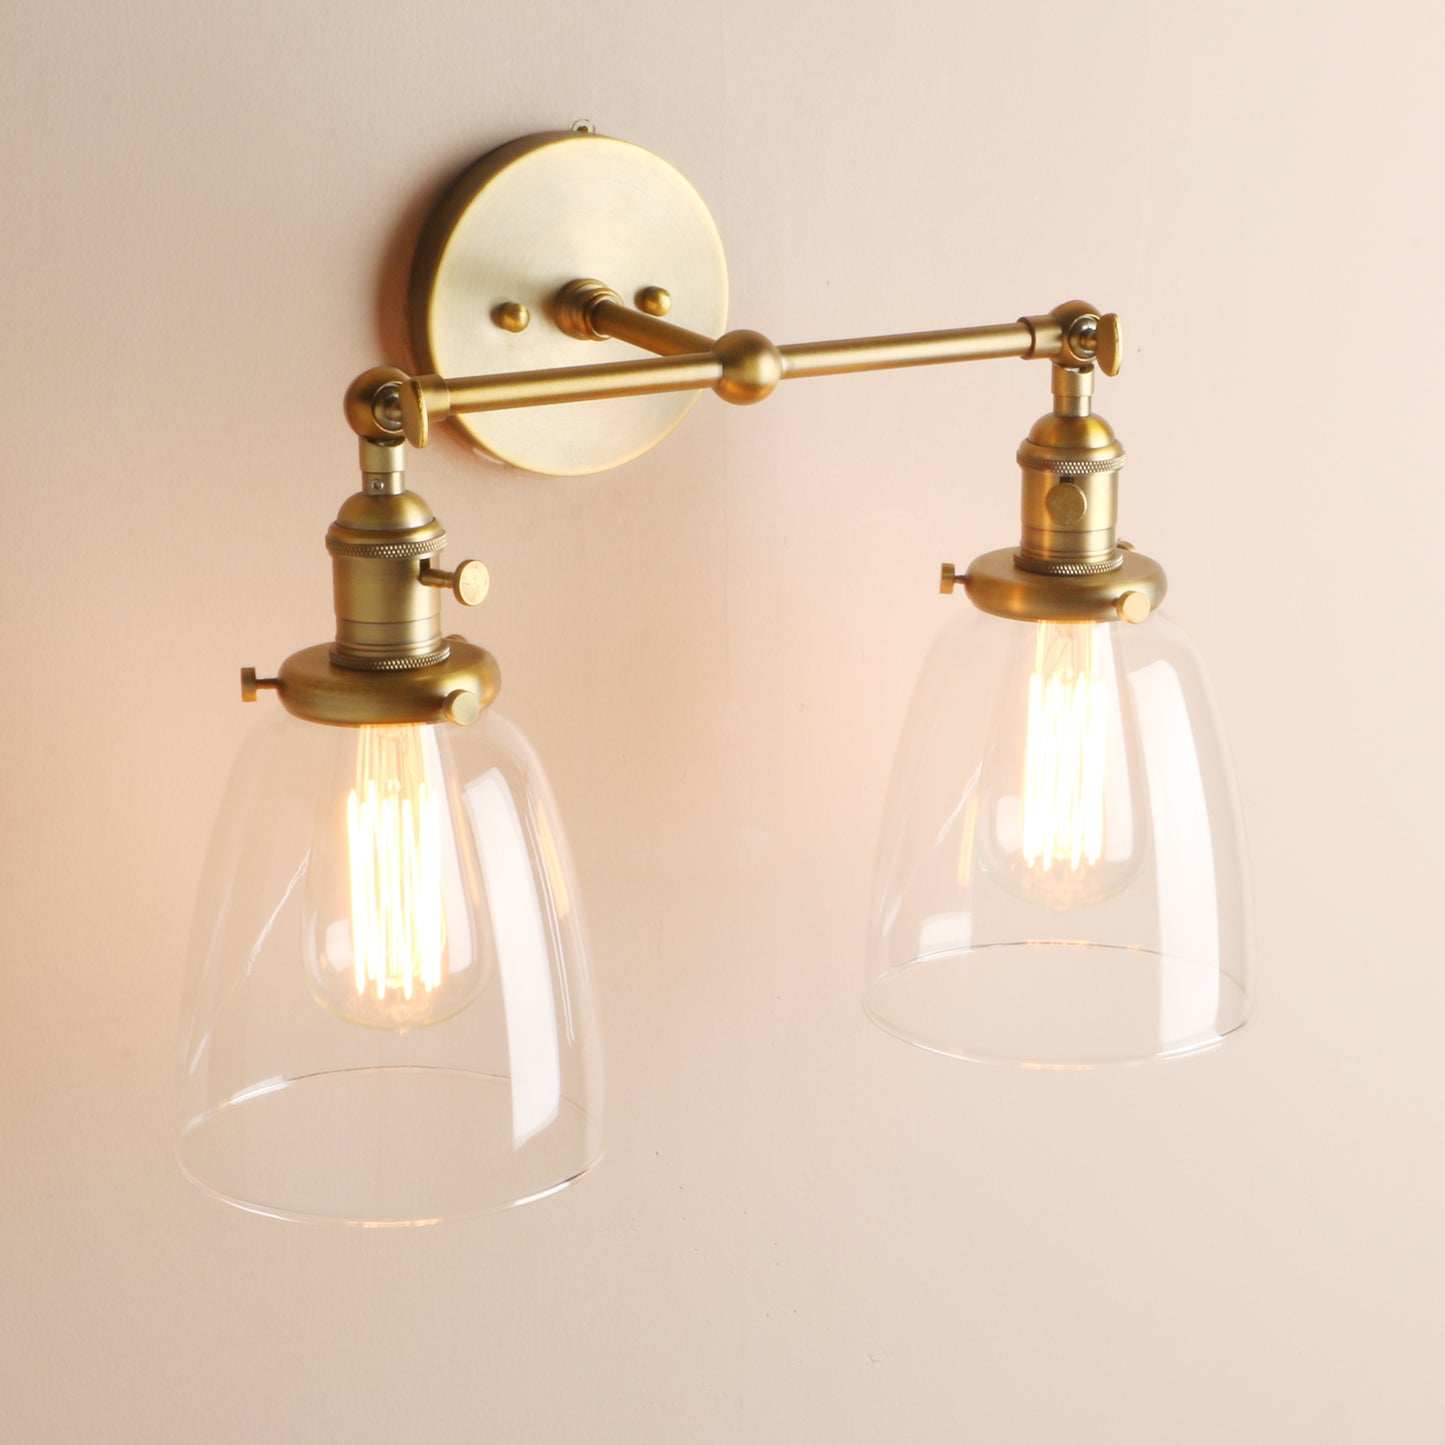 2-Light Industrial Bathroom Wall Light Fixtures Vintage Wall Lamp Lighting